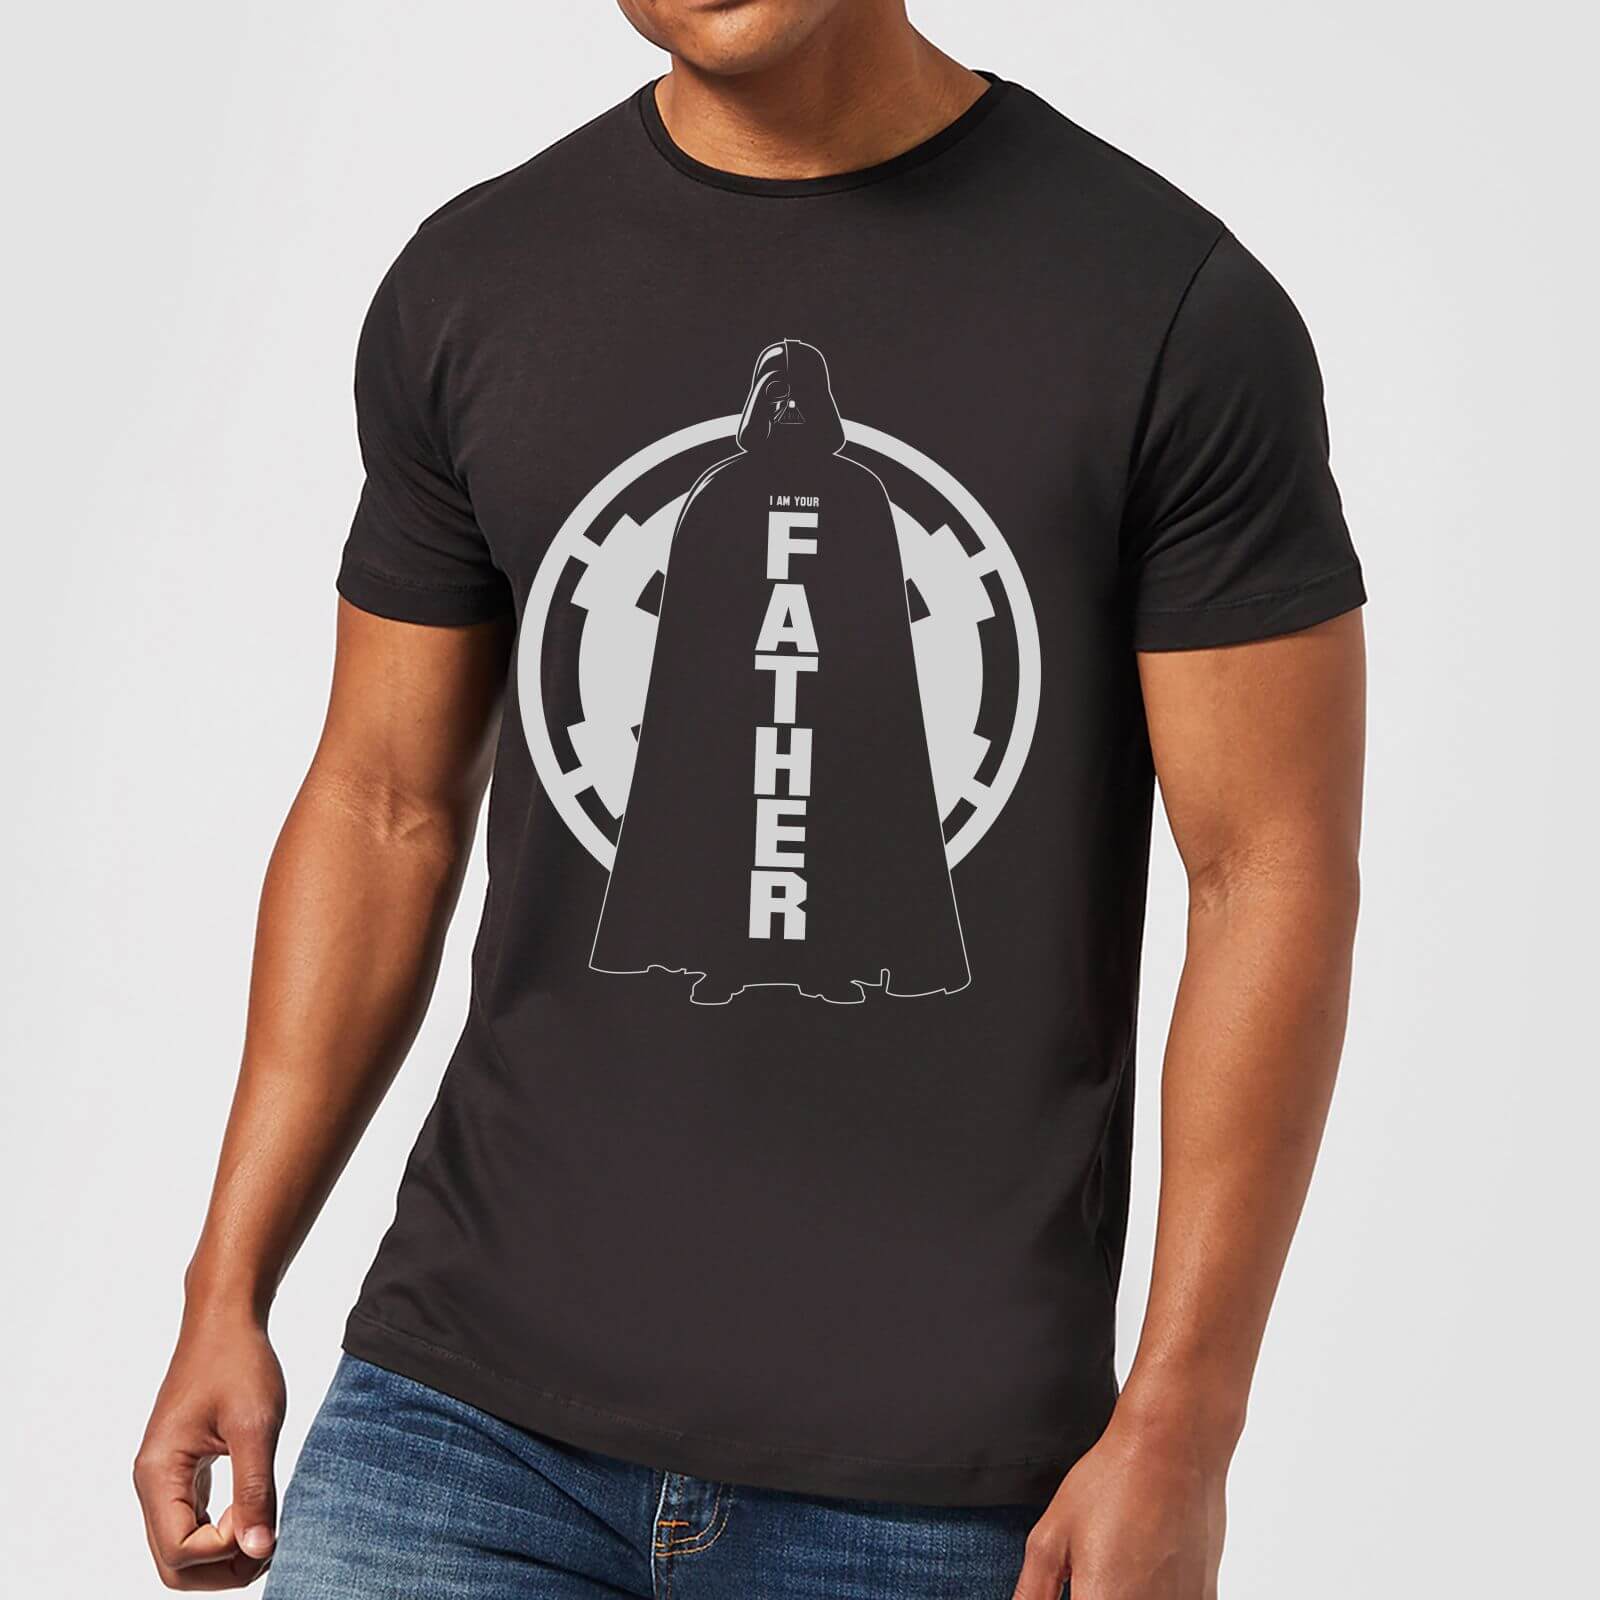 Star Wars Darth Vader Father Imperial Men's T-Shirt - Black - 3XL - Black